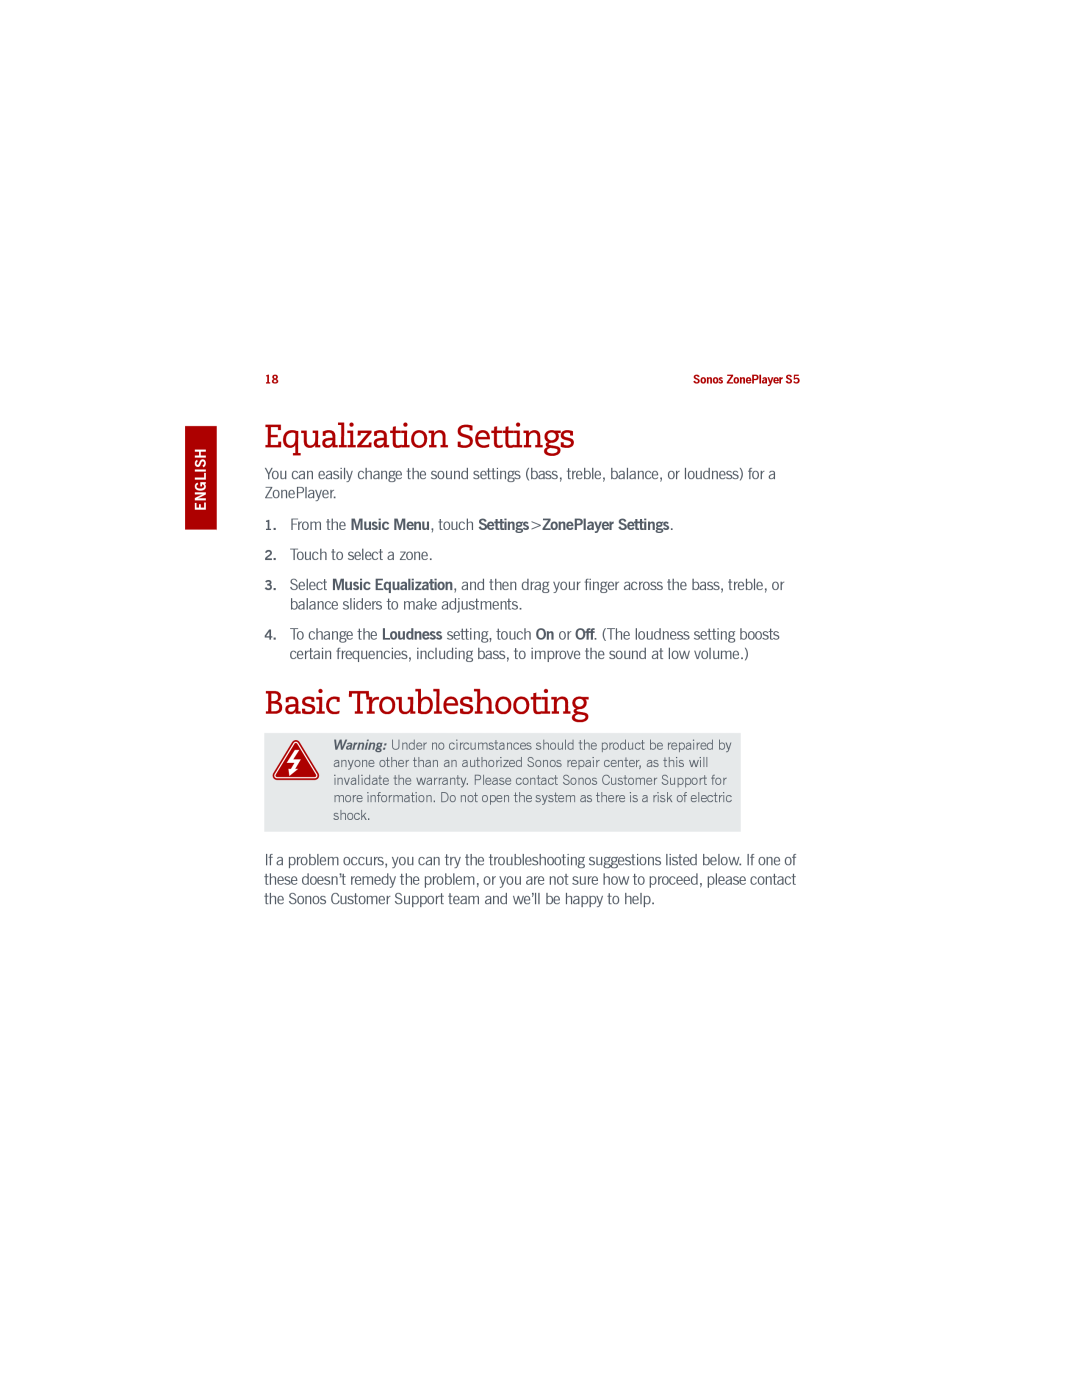 Sonos S5 manual Equalization Settings, Basic Troubleshooting 